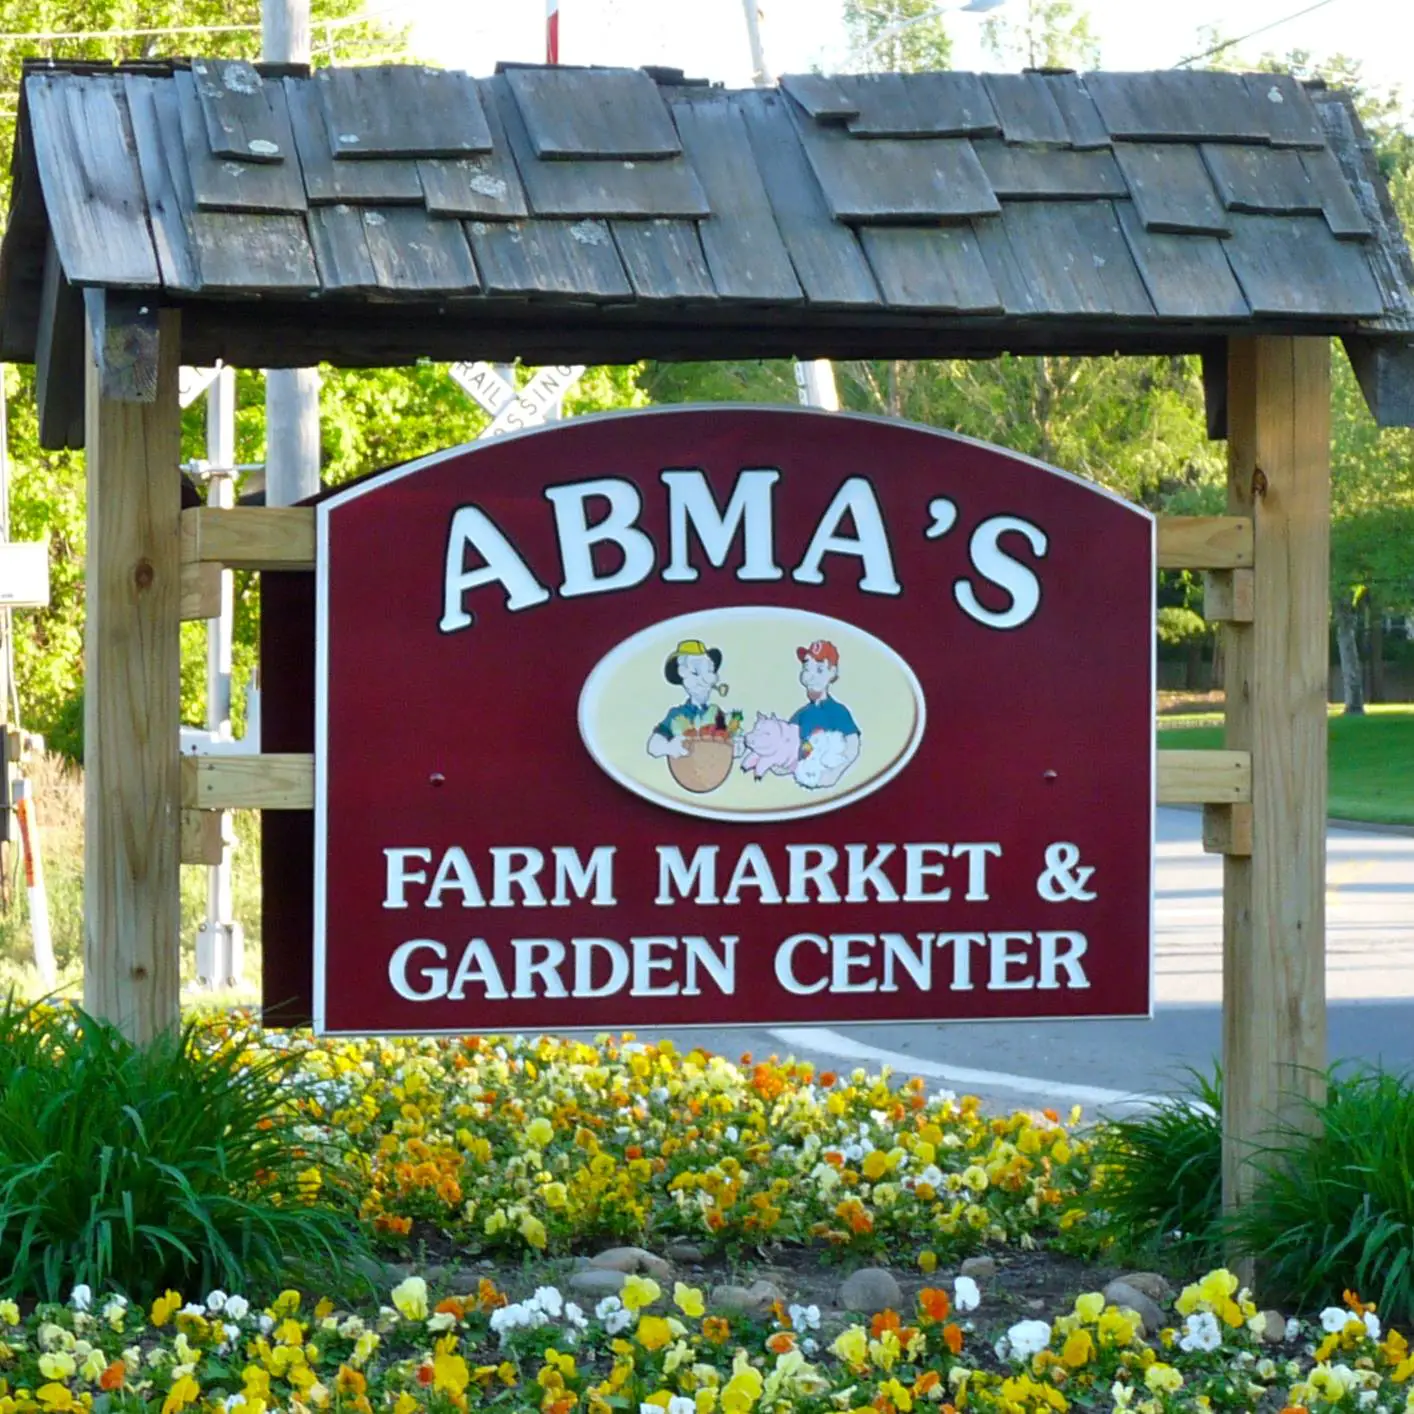 Business logo of Abma's Farm Market, Greenhouse & Petting Zoo